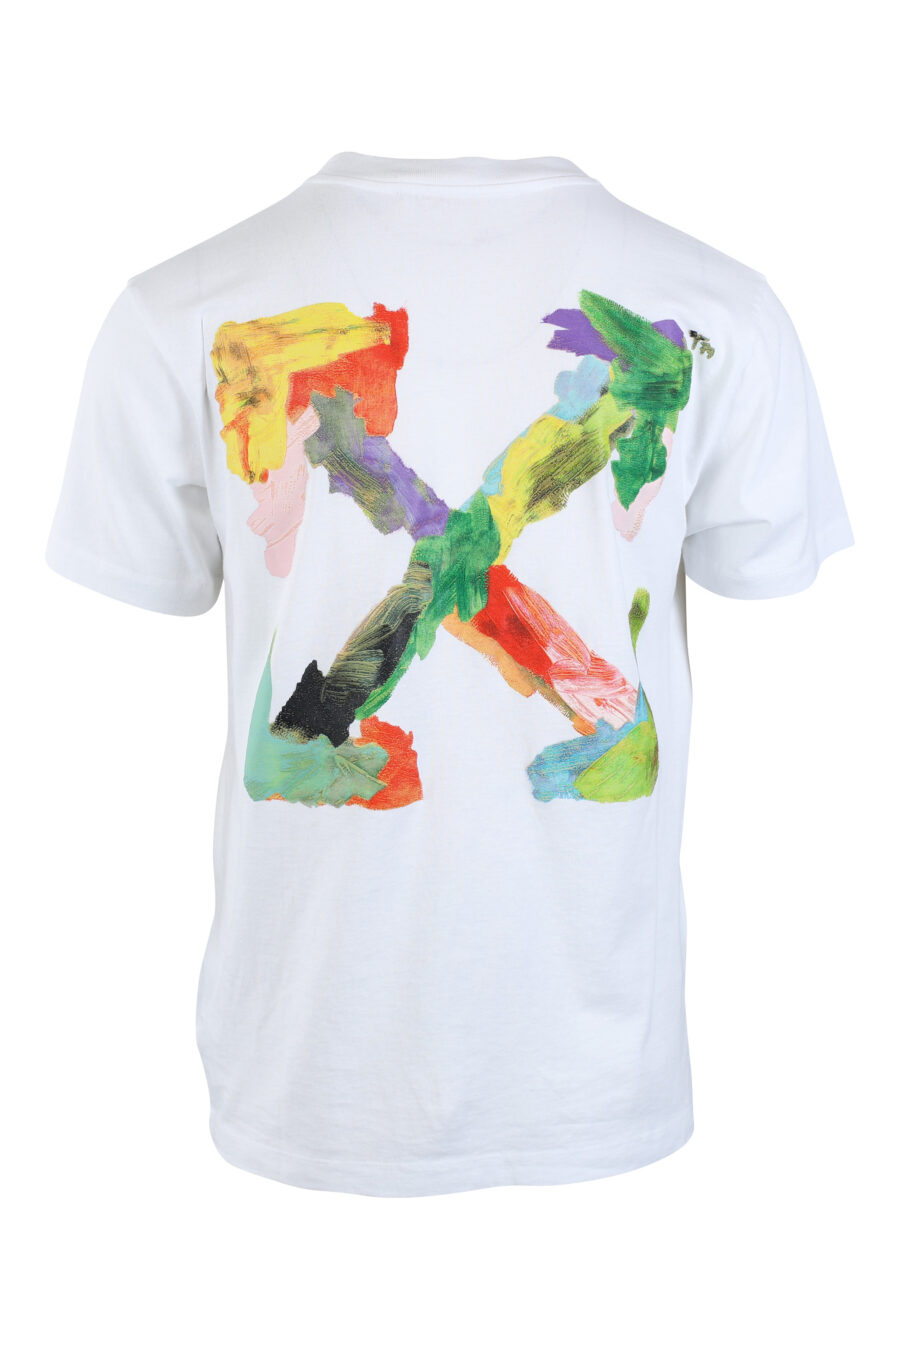 Camiseta blanca con maxilogo "arrow" multicolor por detrás - IMG 2617